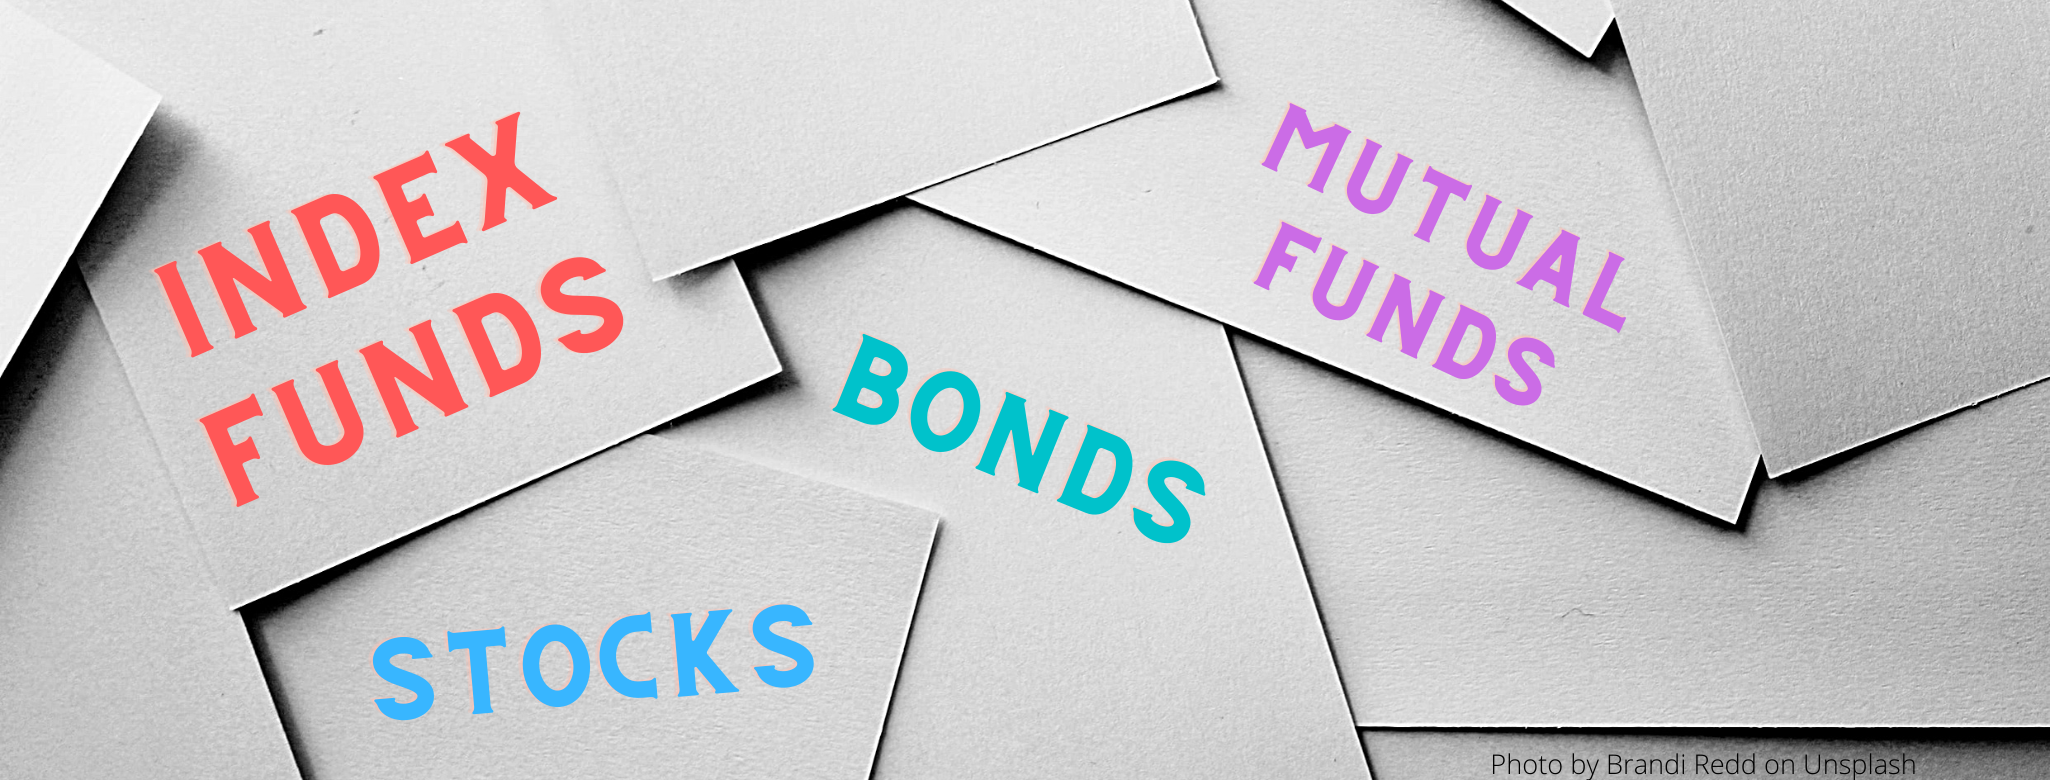 index-funds-vs-mutual-funds-vs-stocks-bonds